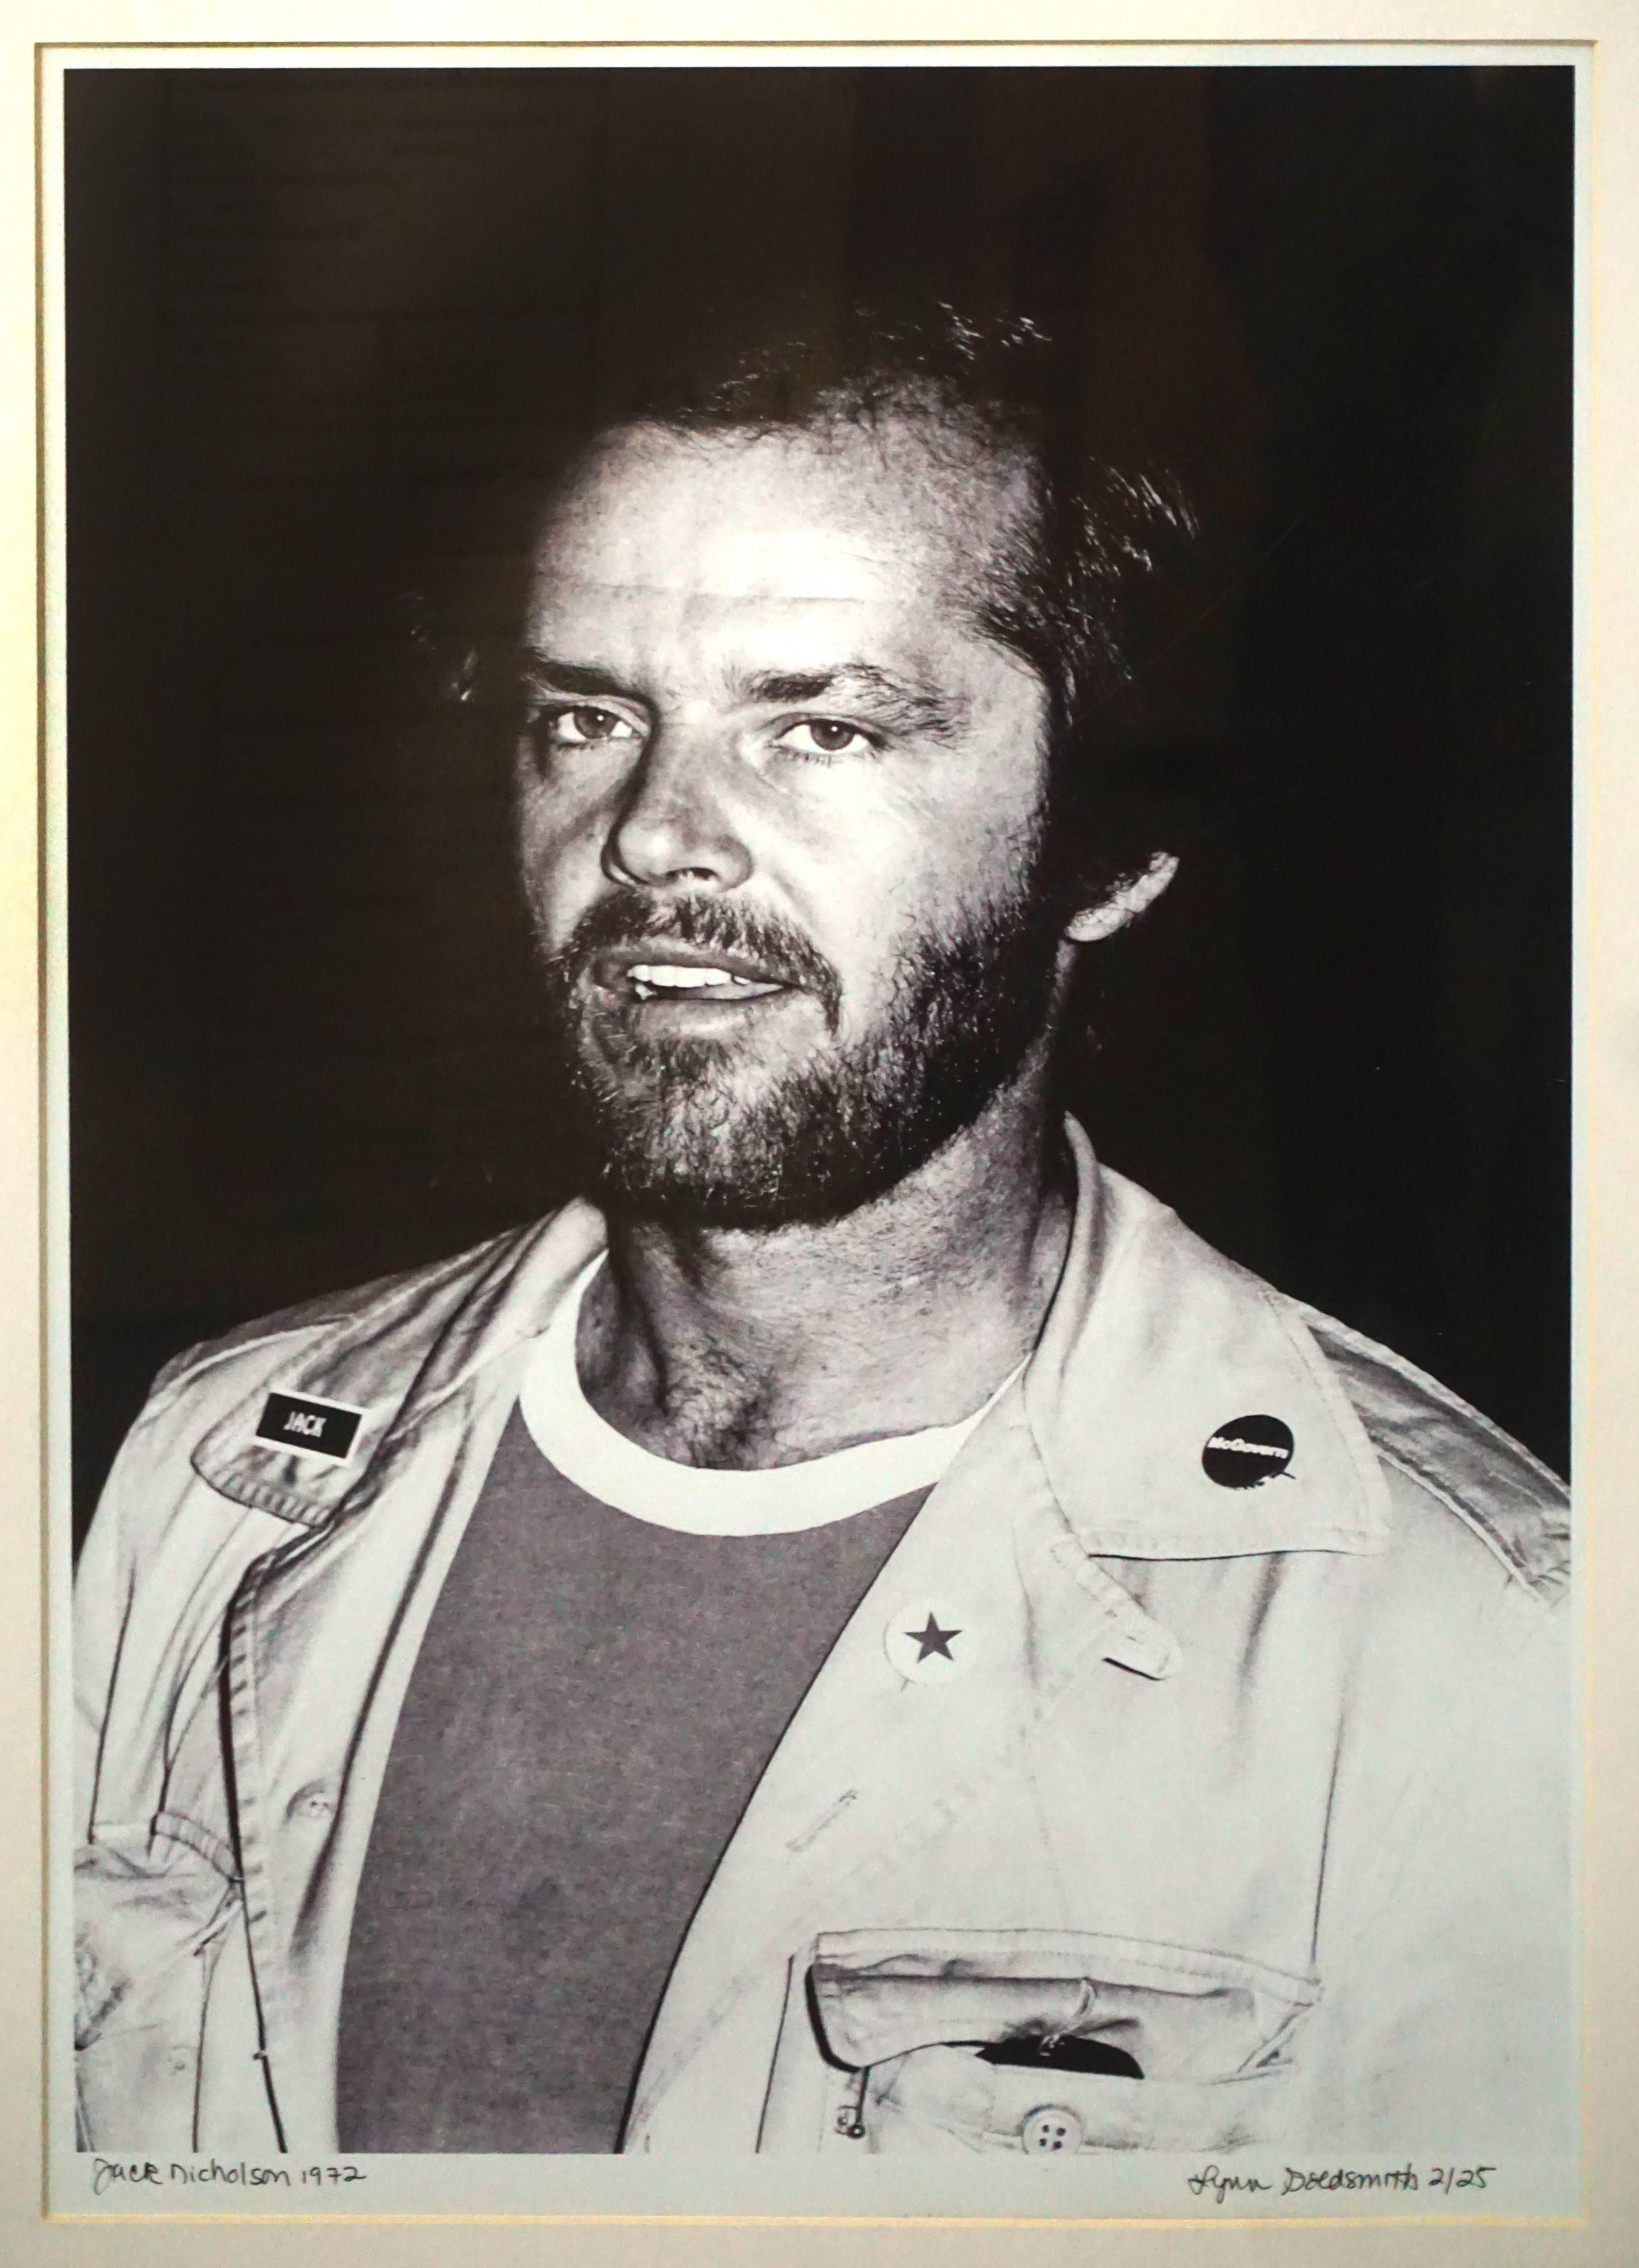 Lynn Goldsmith Portrait Photograph - Jack Nicholson photograph from 1972